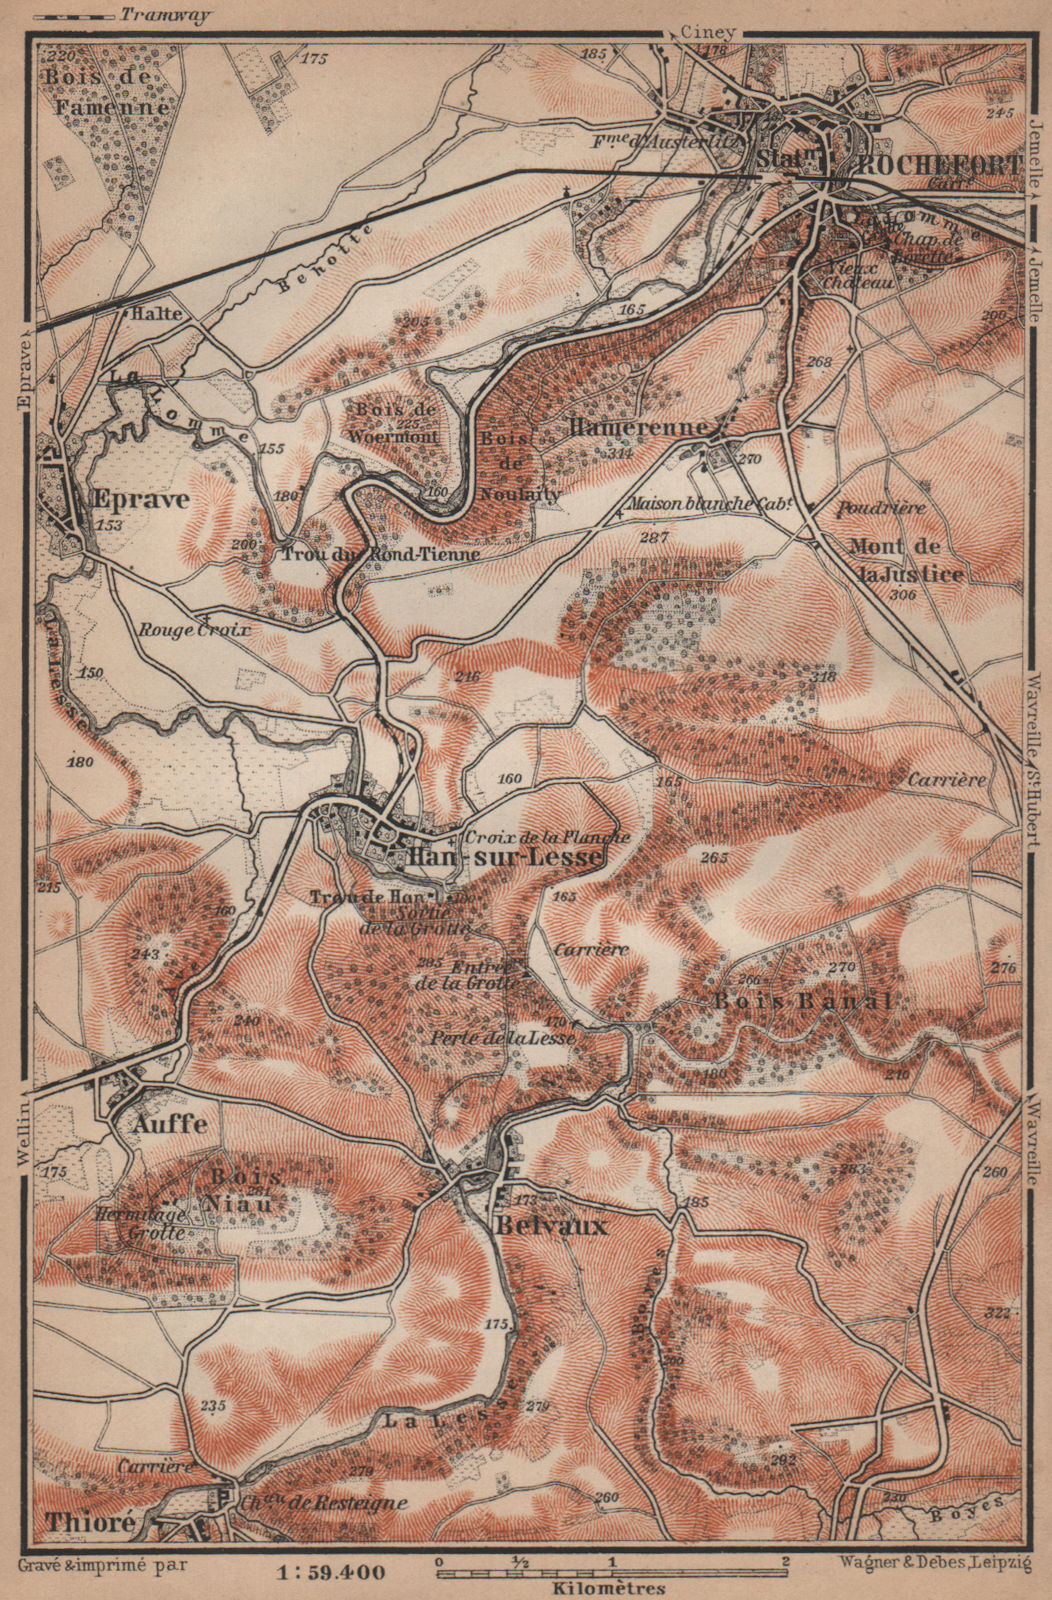 Associate Product ROCHEFORT & HAN-SUR-LESSE environs. Auffe Belvaux Eprave. Belgium 1905 old map